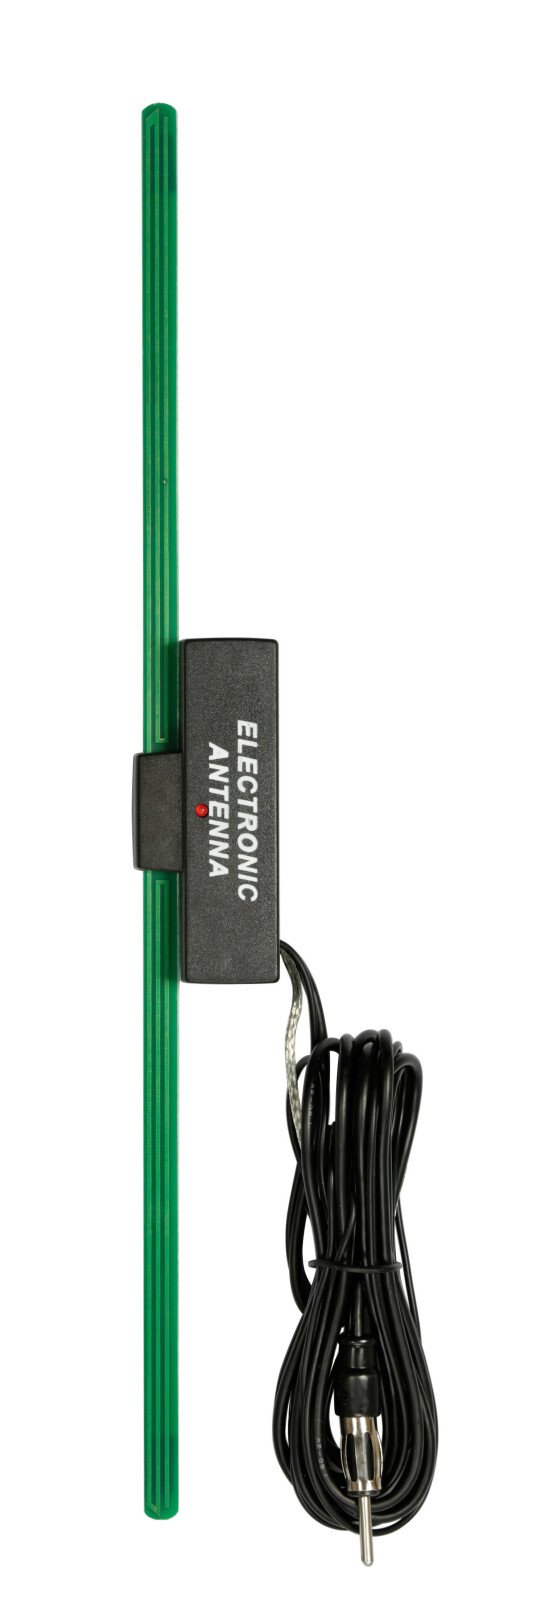 Electronic antenna, 12V thumb